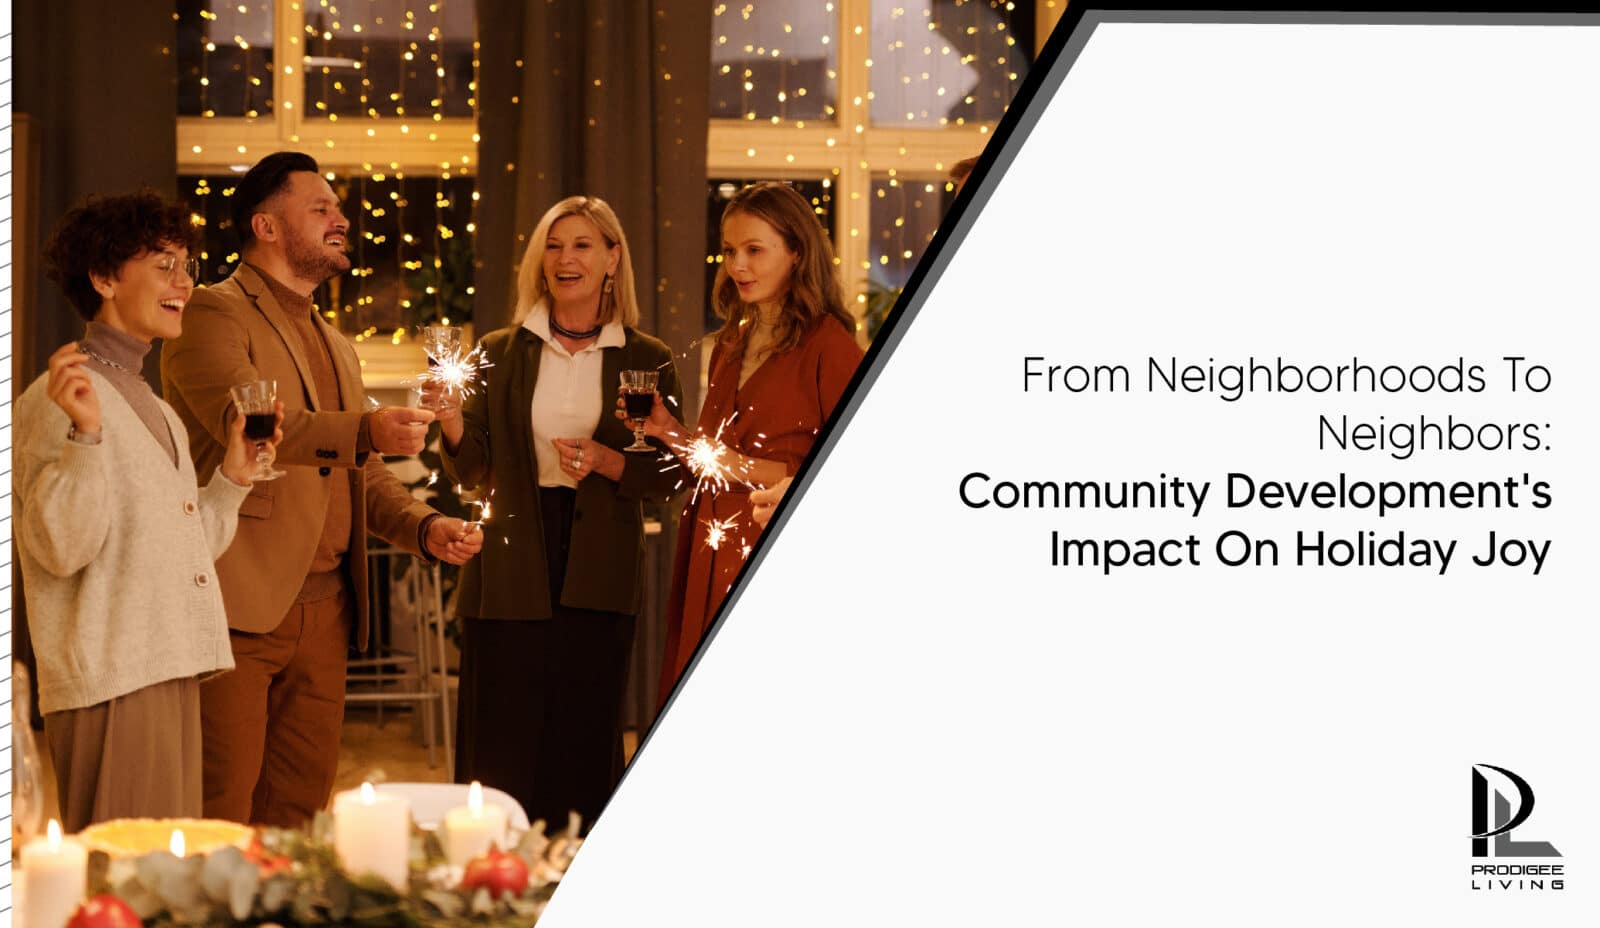 from neighborhoods to neighbors: community development's impact on holiday joy